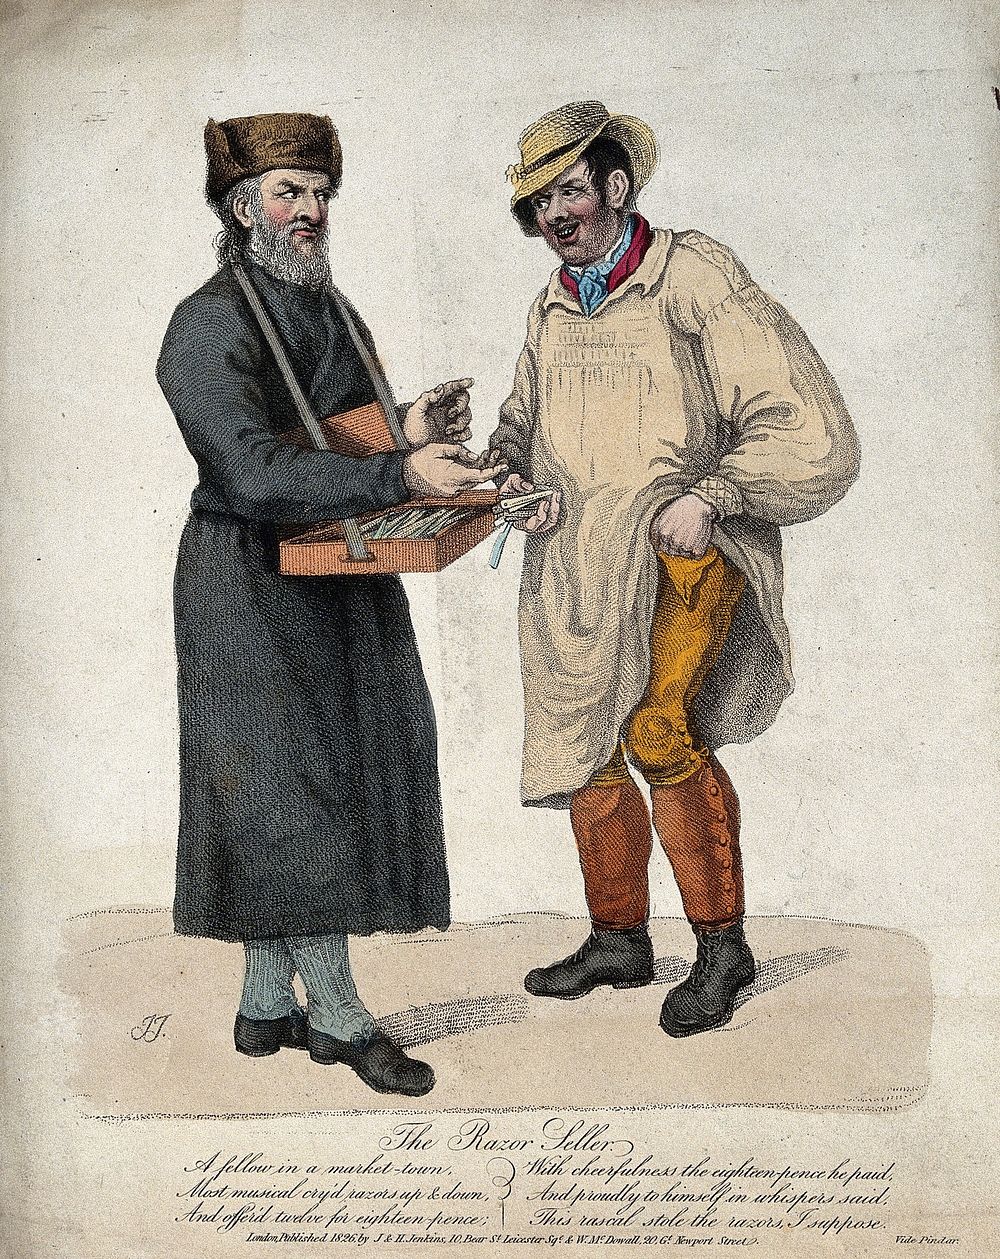 A bearded man selling razors to a farmer. Crayon manner print by J.J. Jenkins after Peter Pindar (John Wolcot).